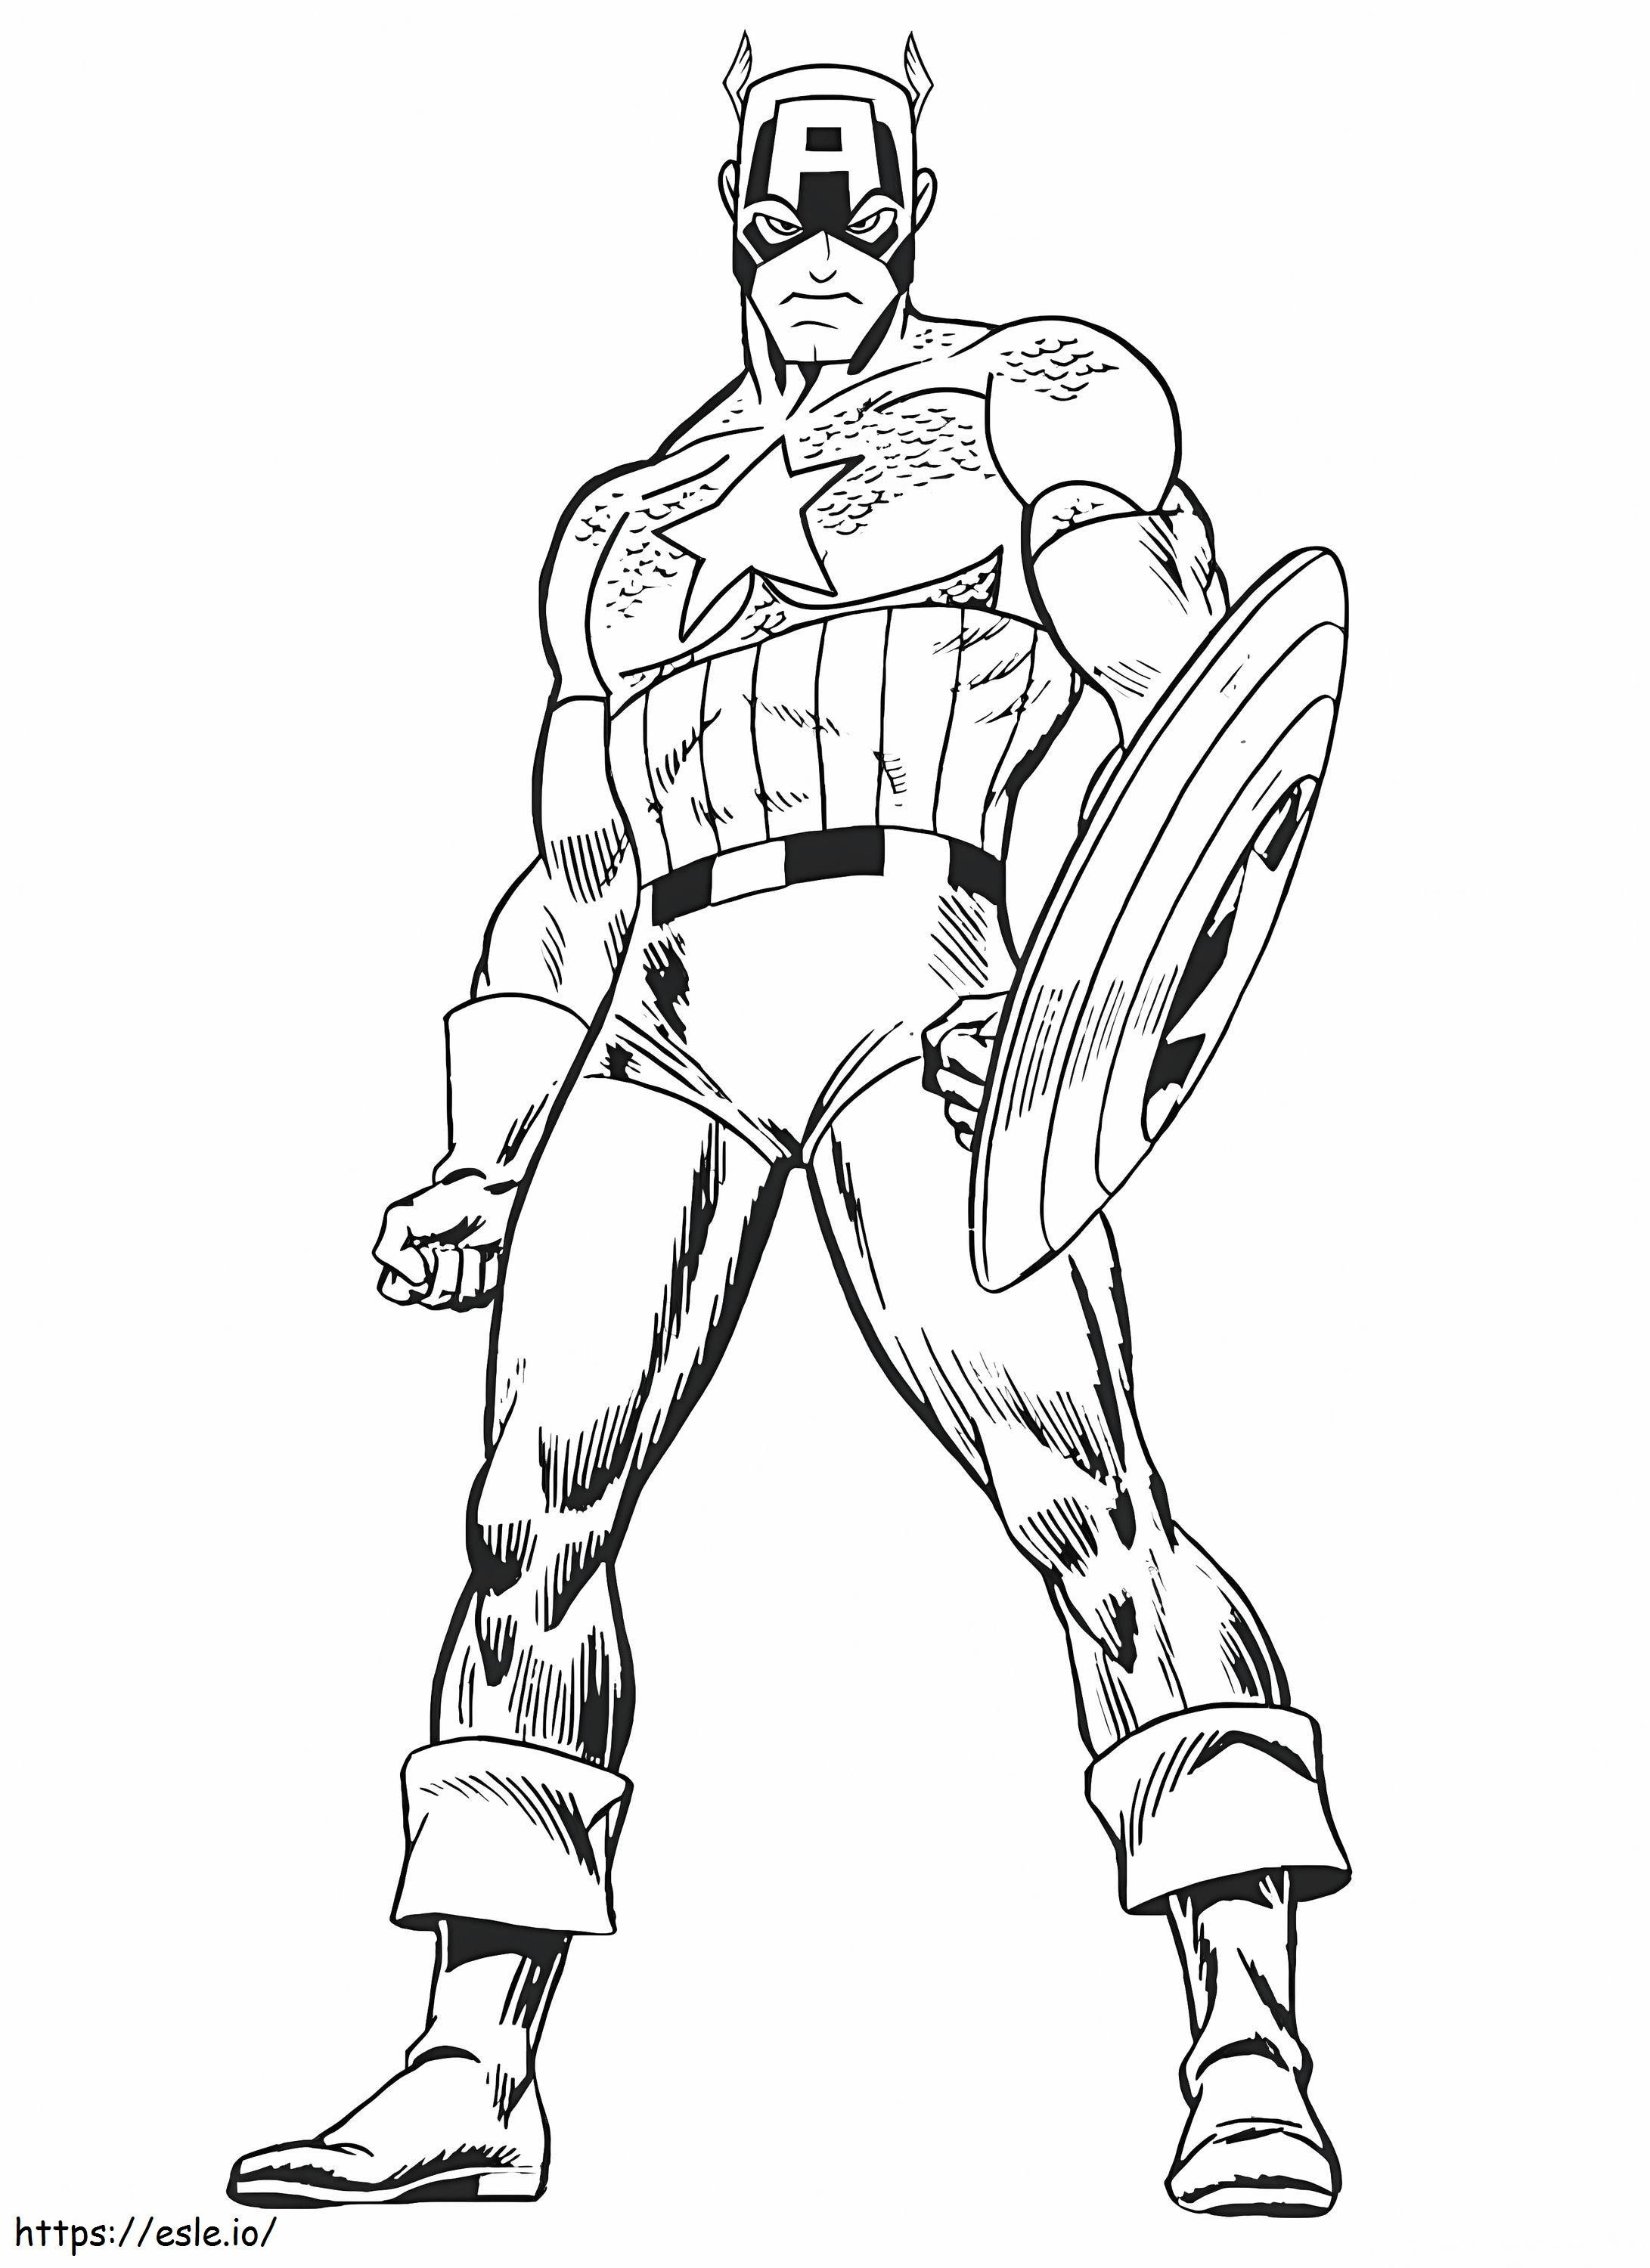 Captain America En Colere coloring page